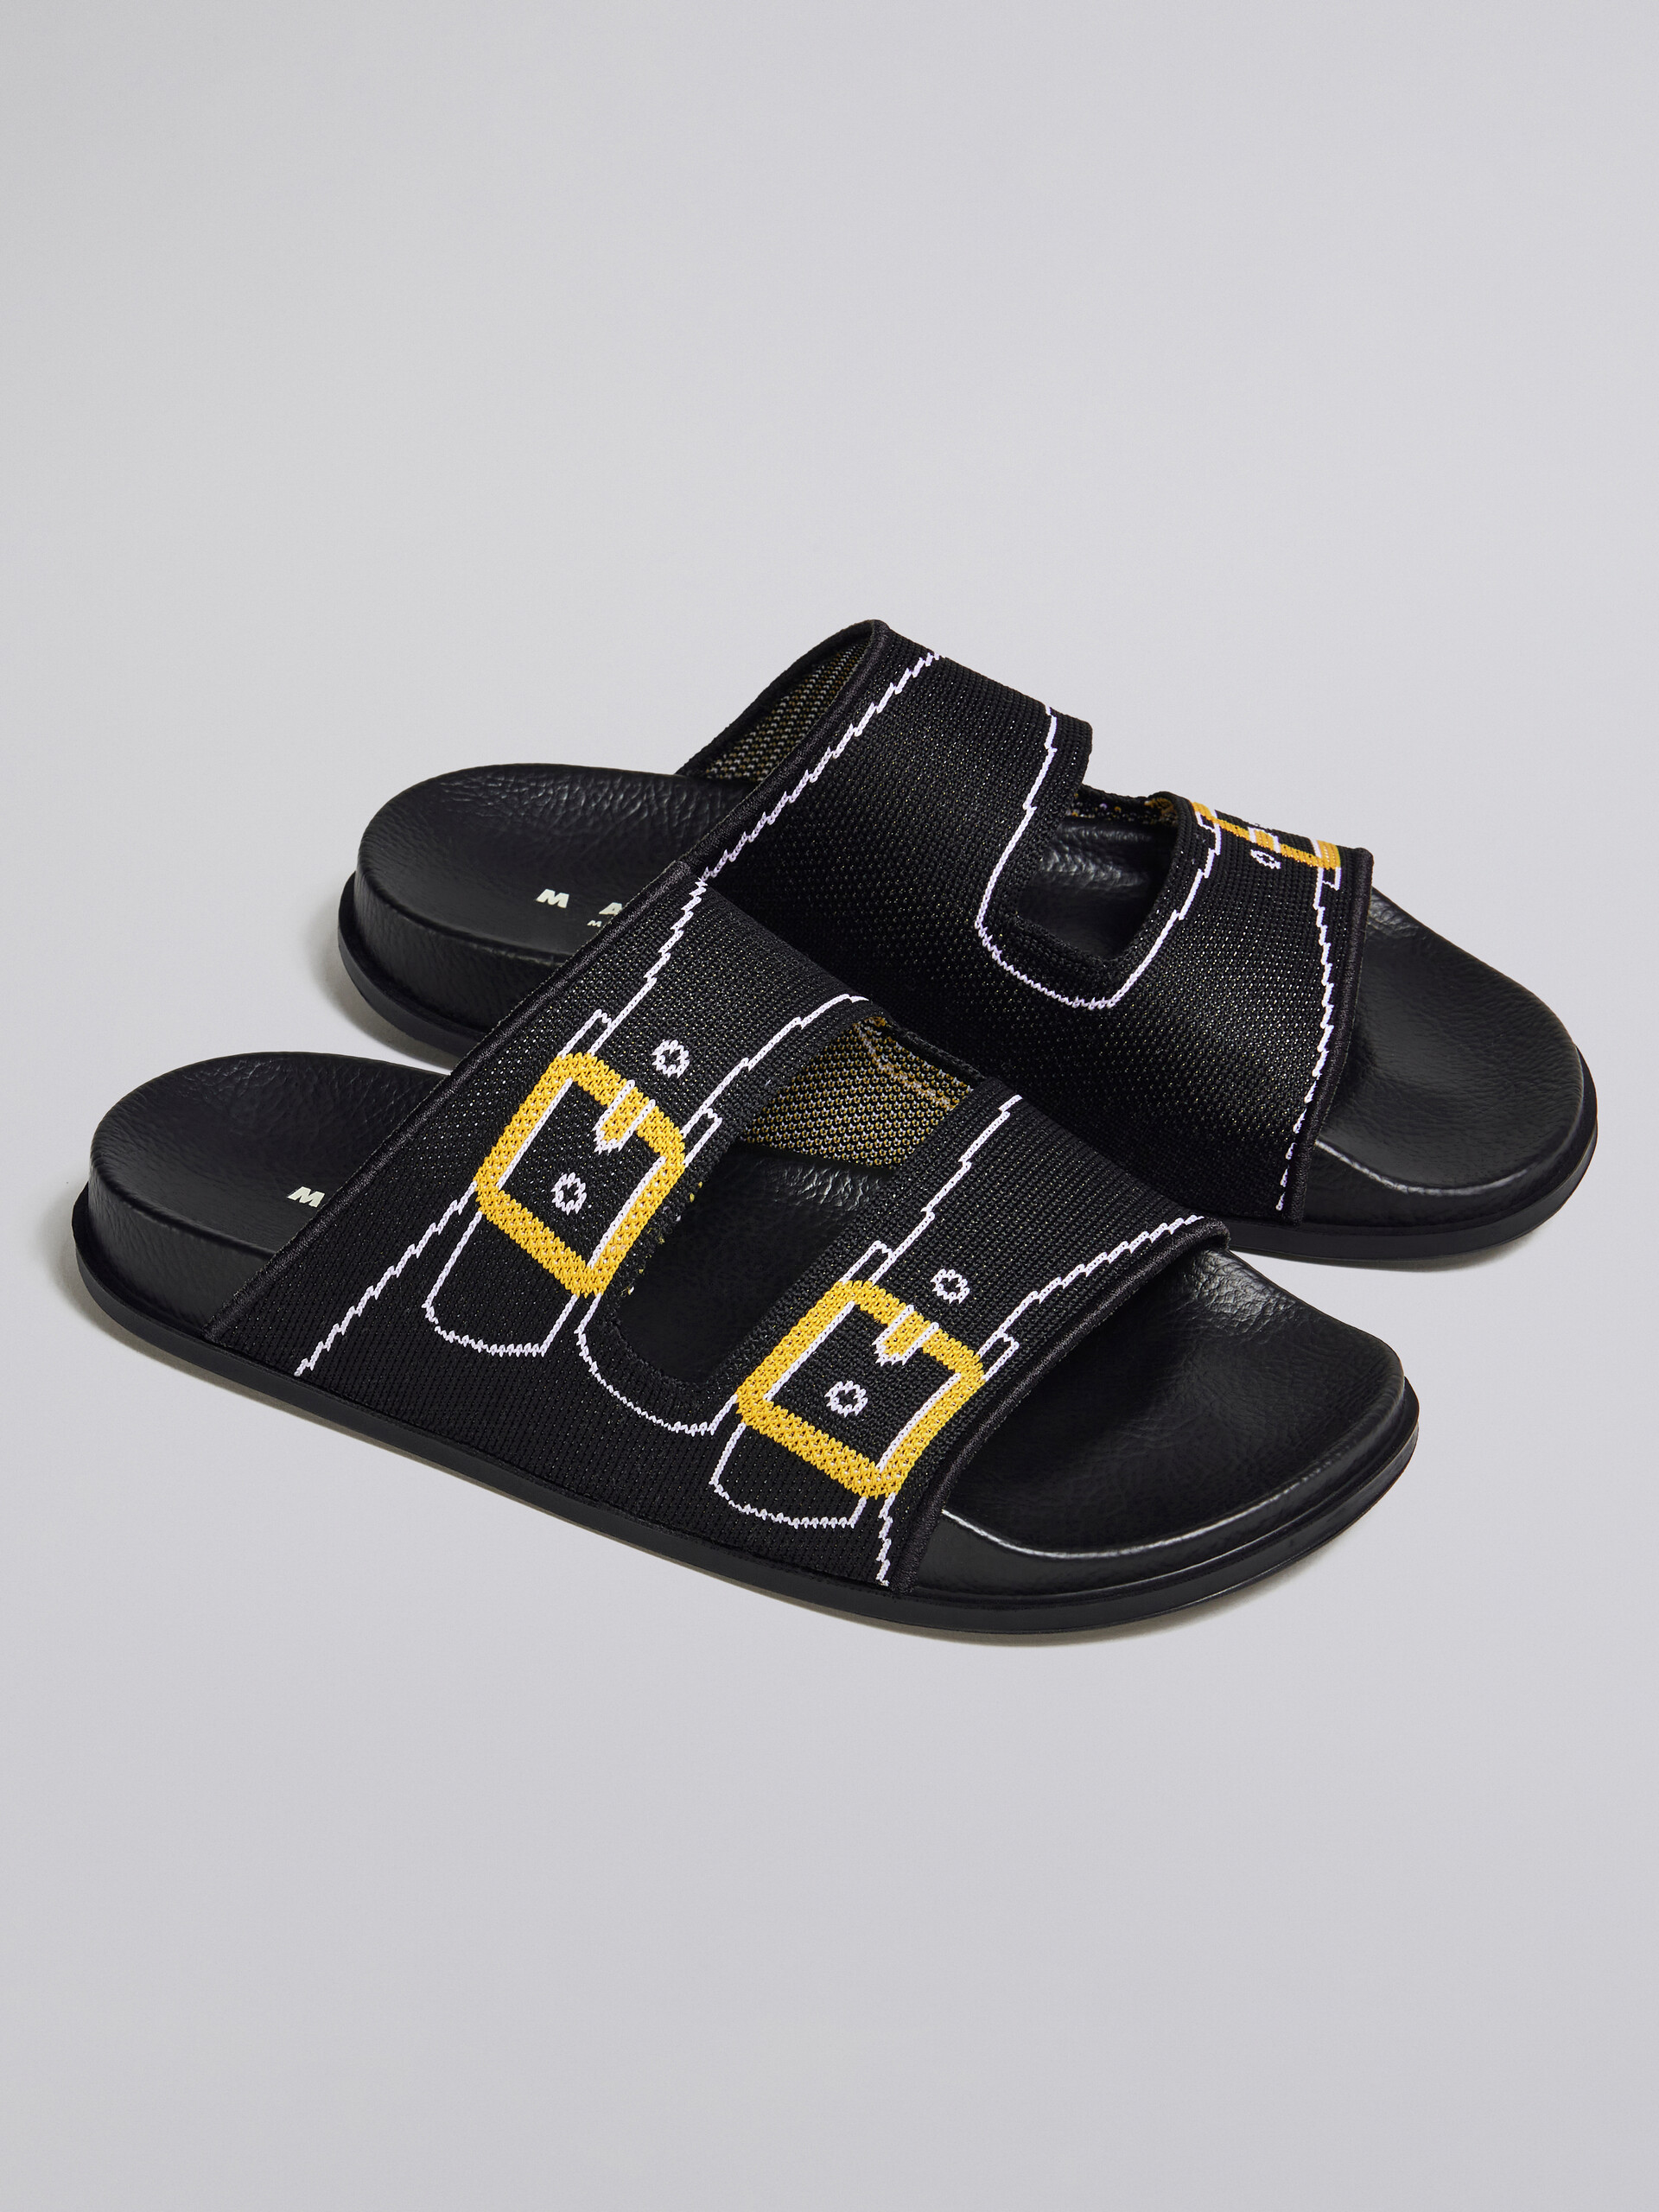 Black and gold trompe l'oeil jacquard two-strap slide - Sandals - Image 5